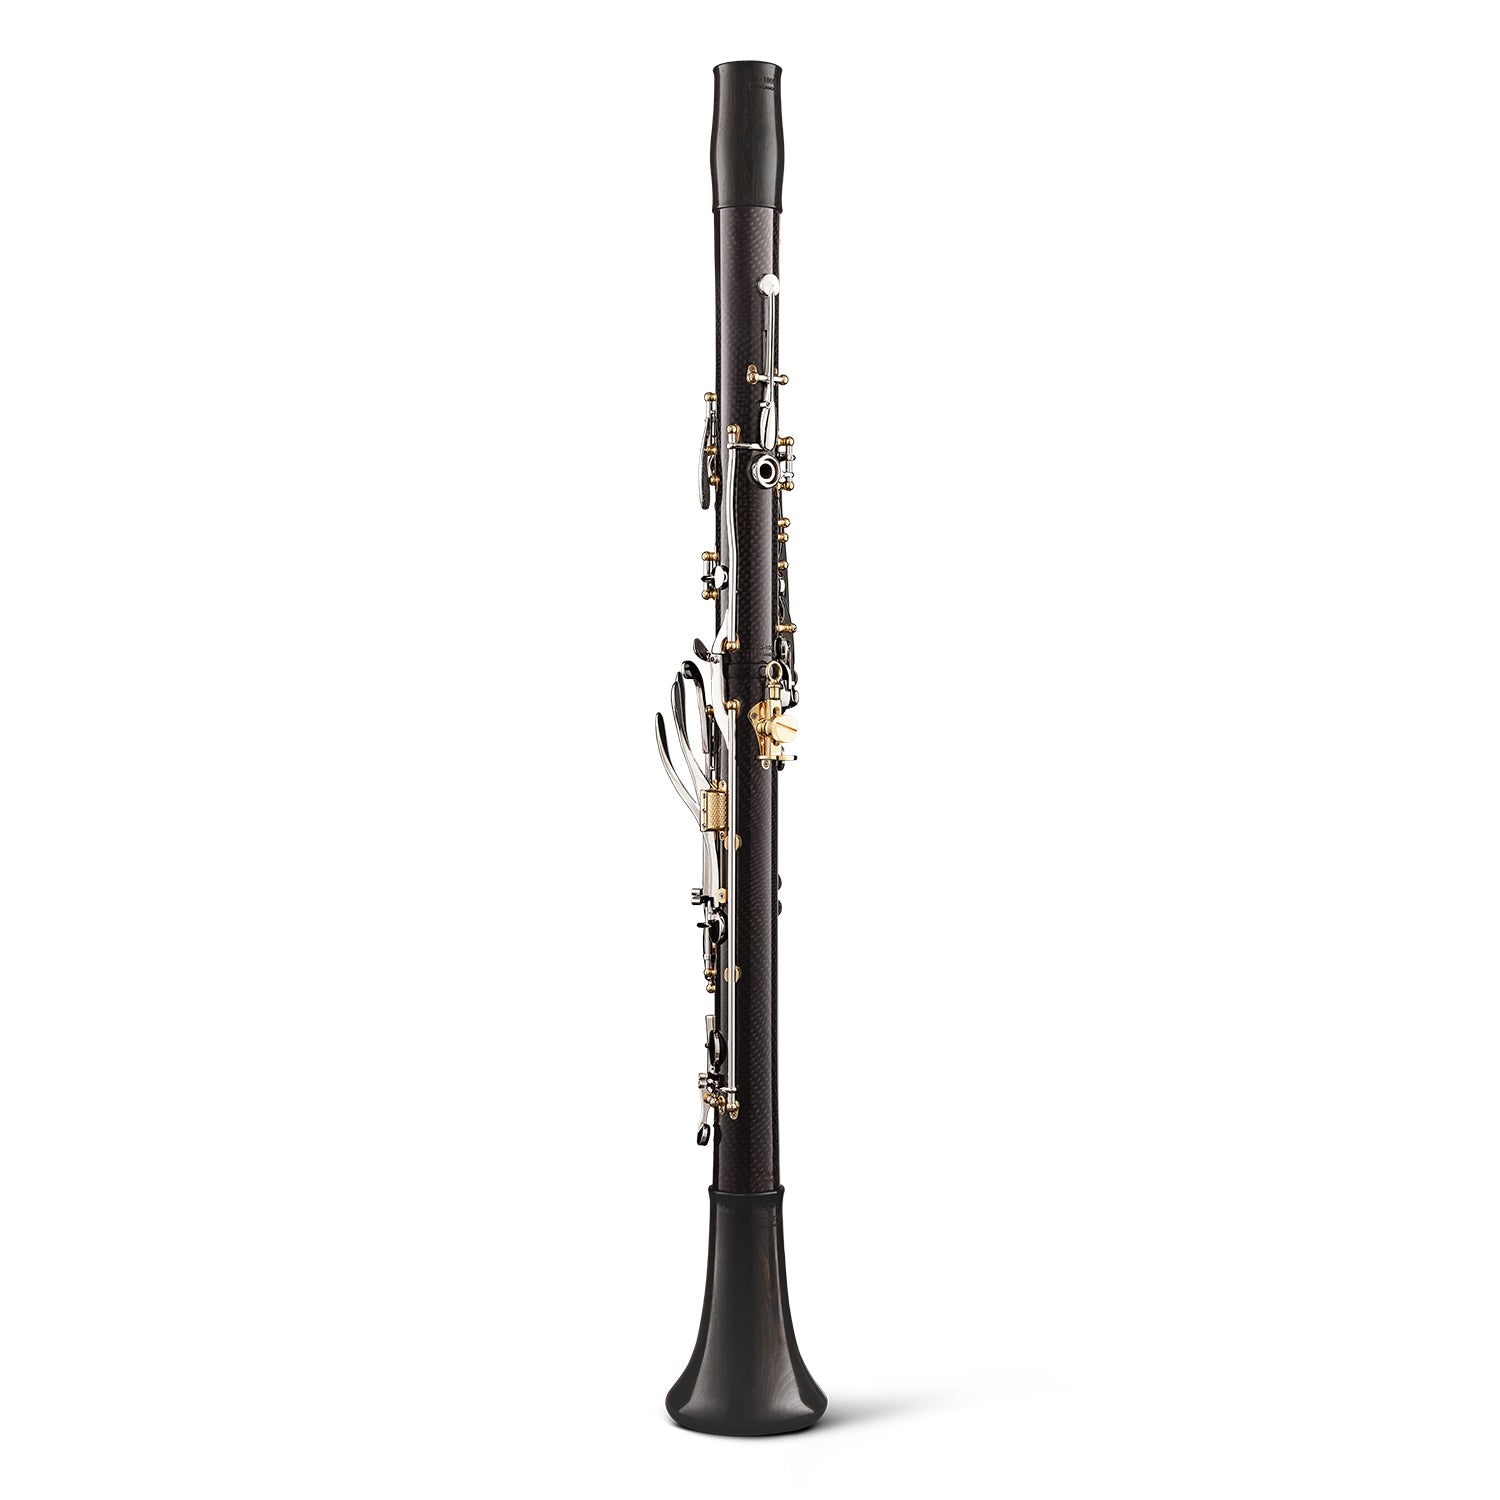 backun-a-clarinet-CG-carbon-grenadilla-silver-with-gold-posts-back